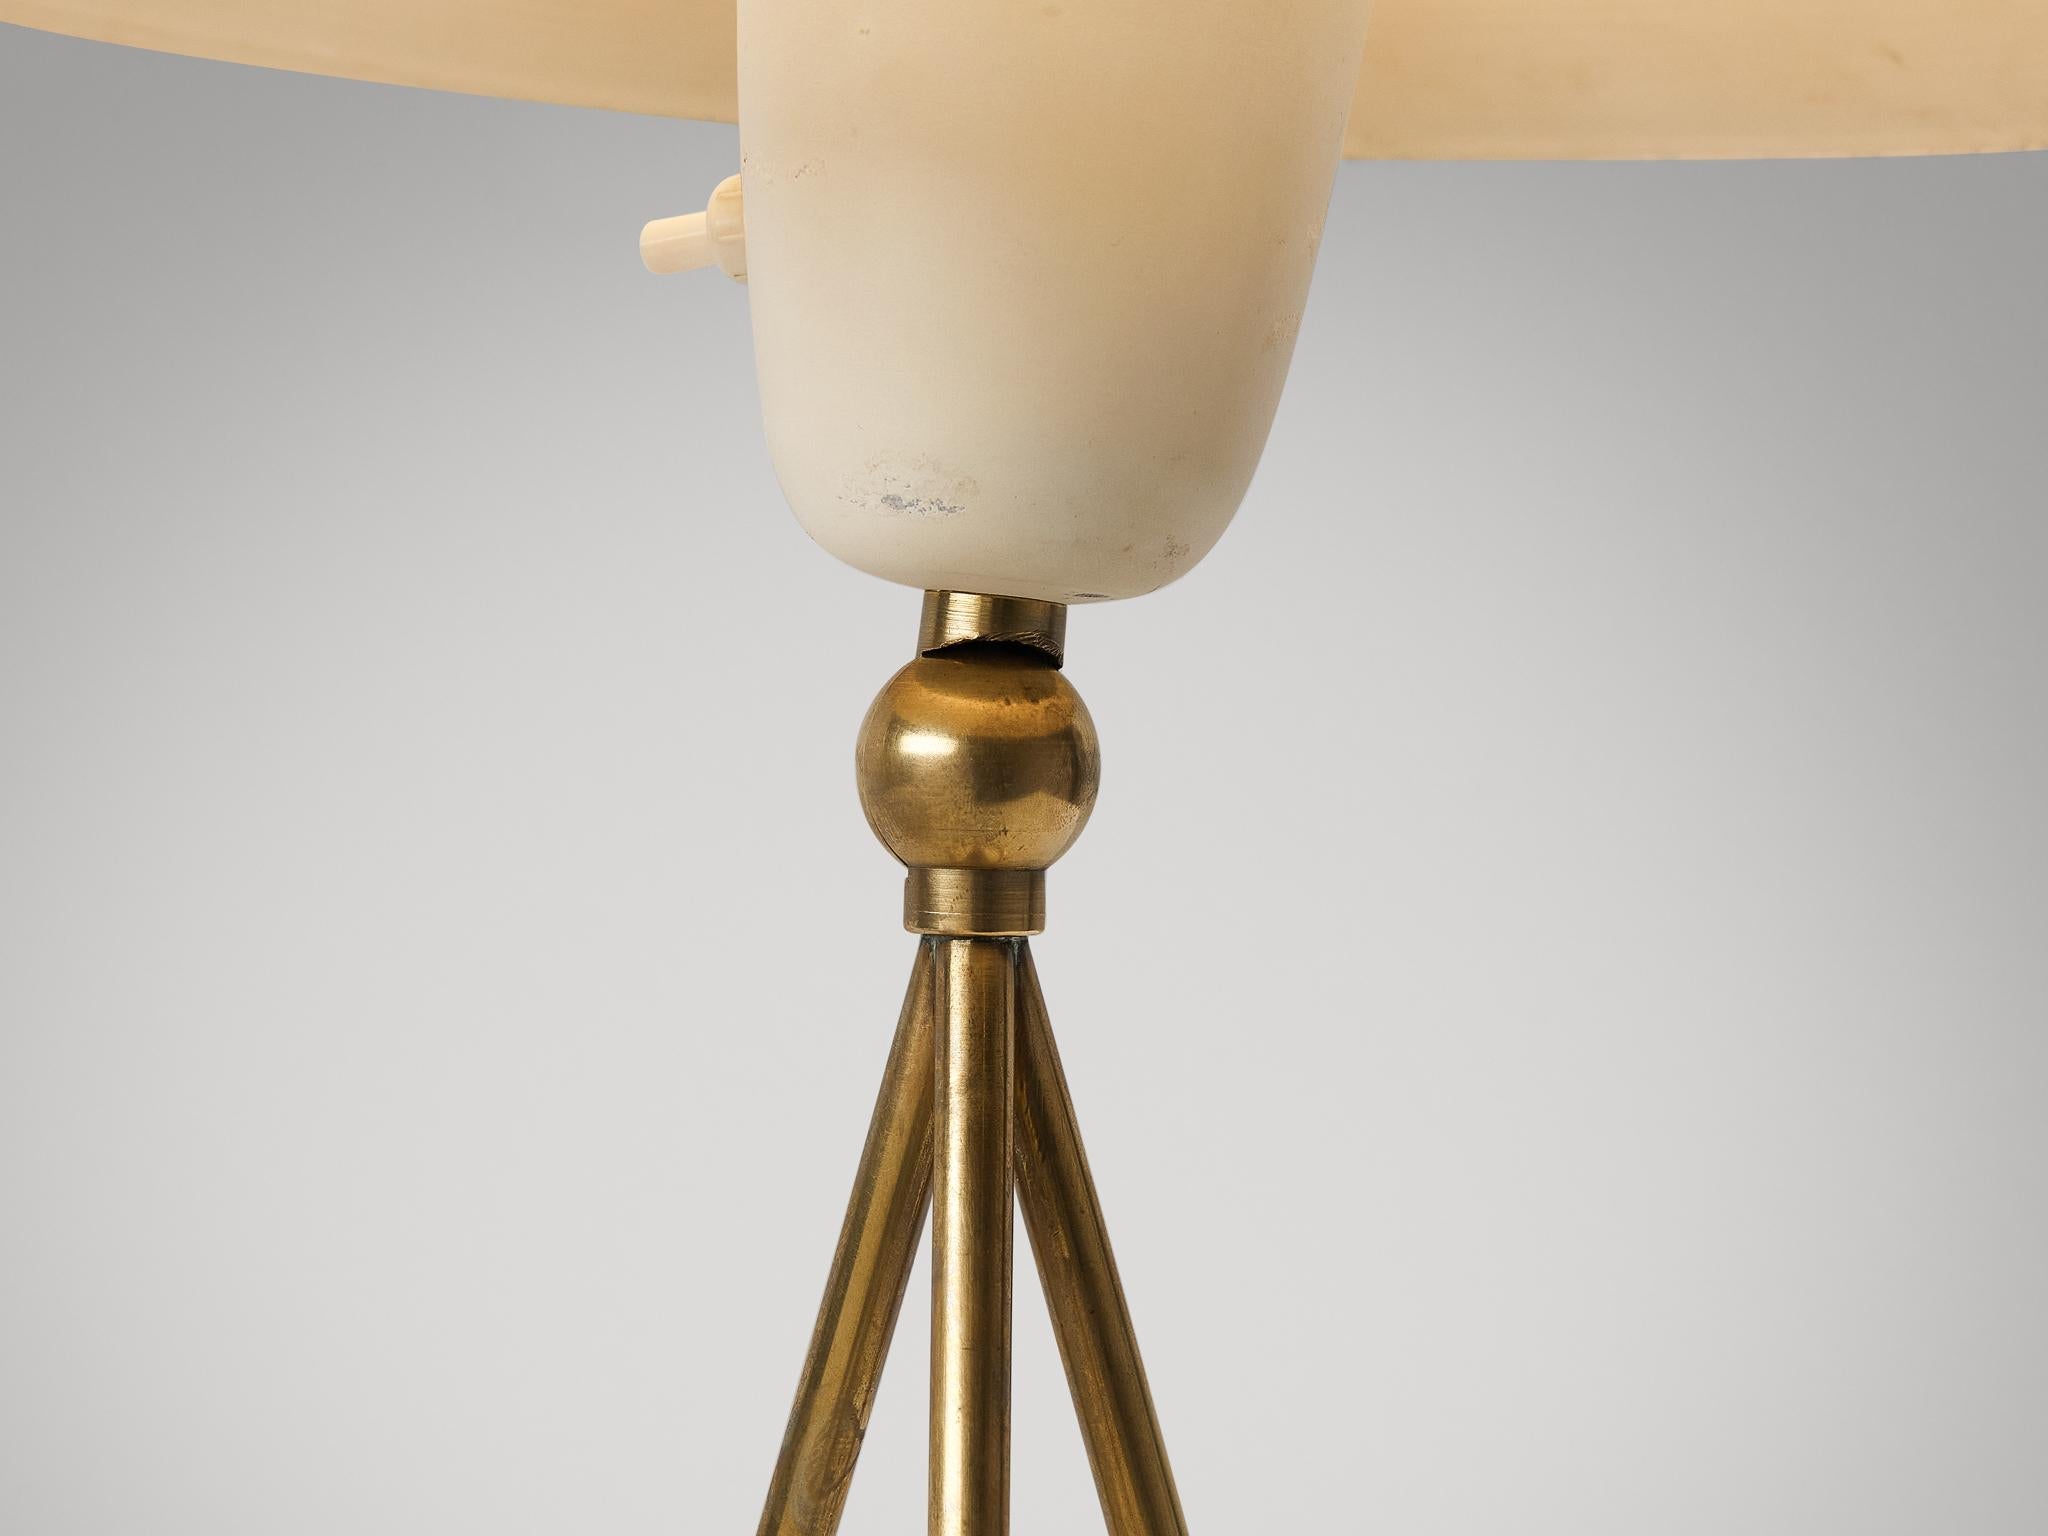 Gino Sarfatti for Arteluce '516' Table Lamp